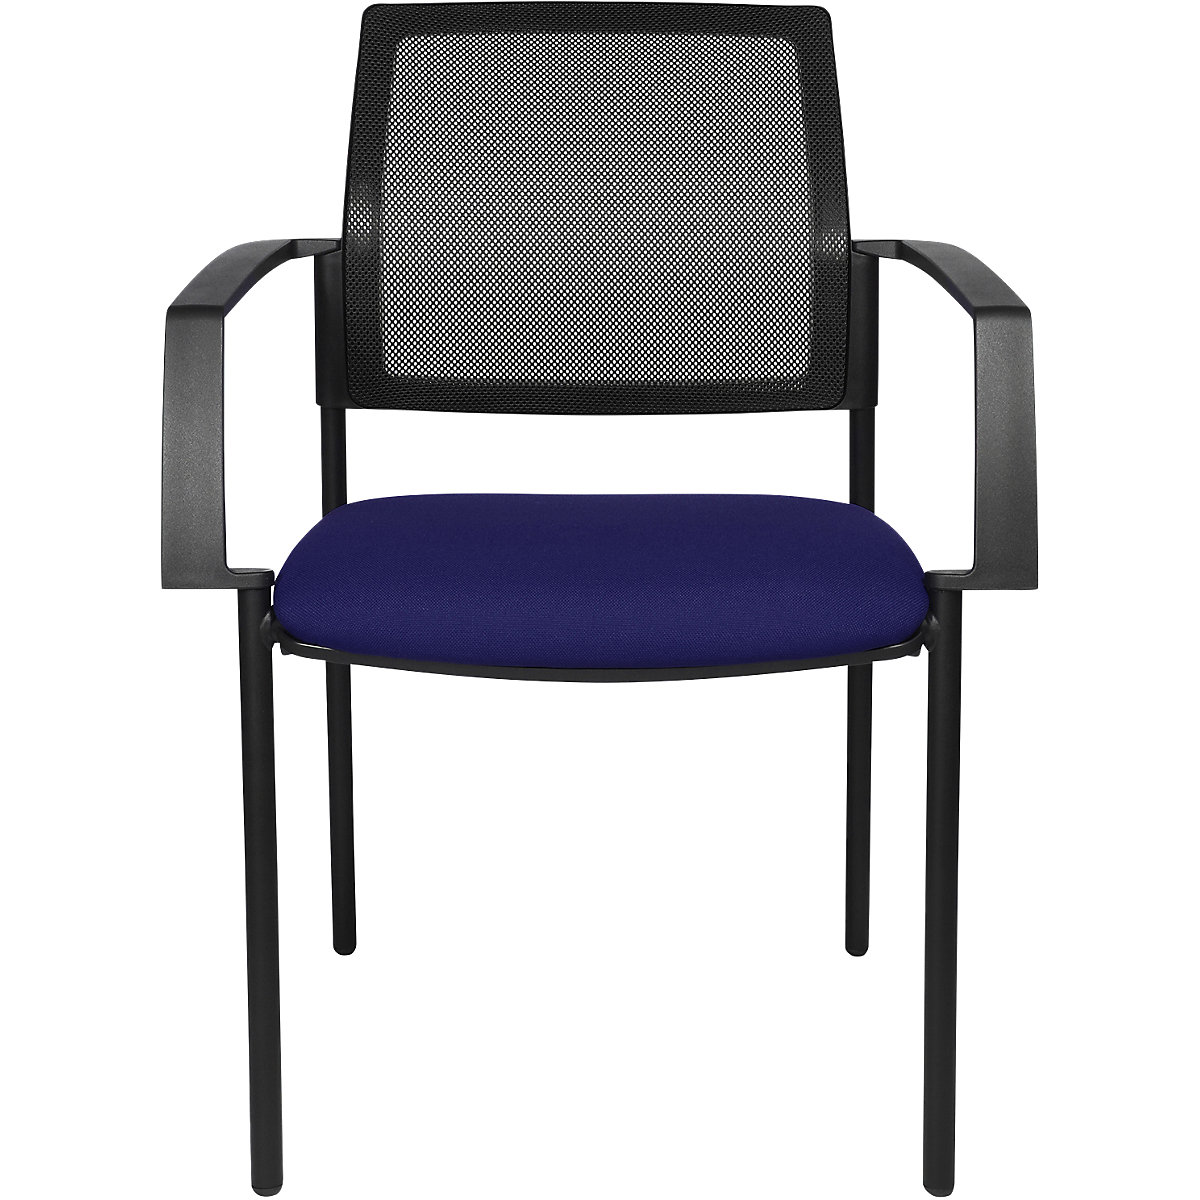 Mesh stacking chair – Topstar